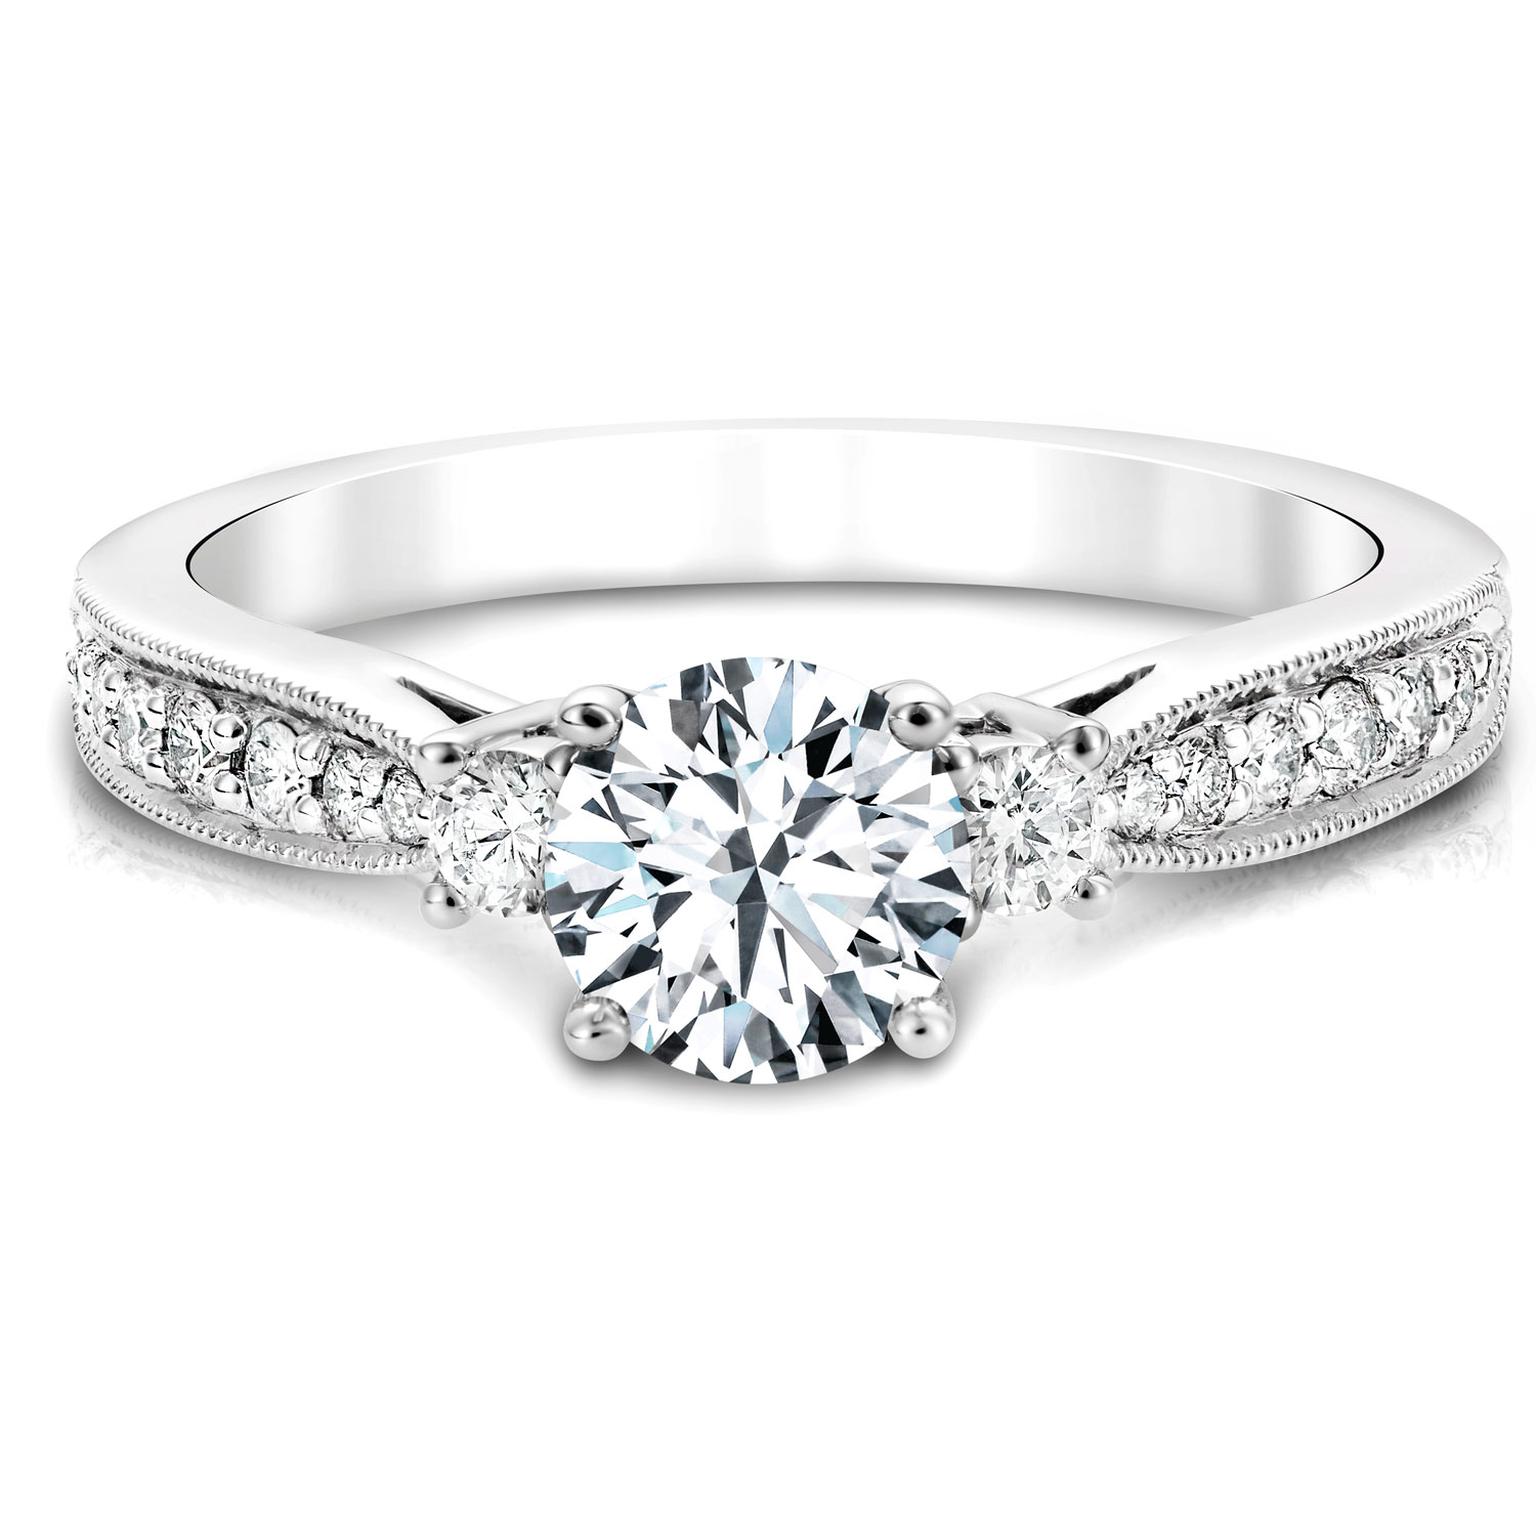 Jacob Mercari Canadian diamond engagement ring